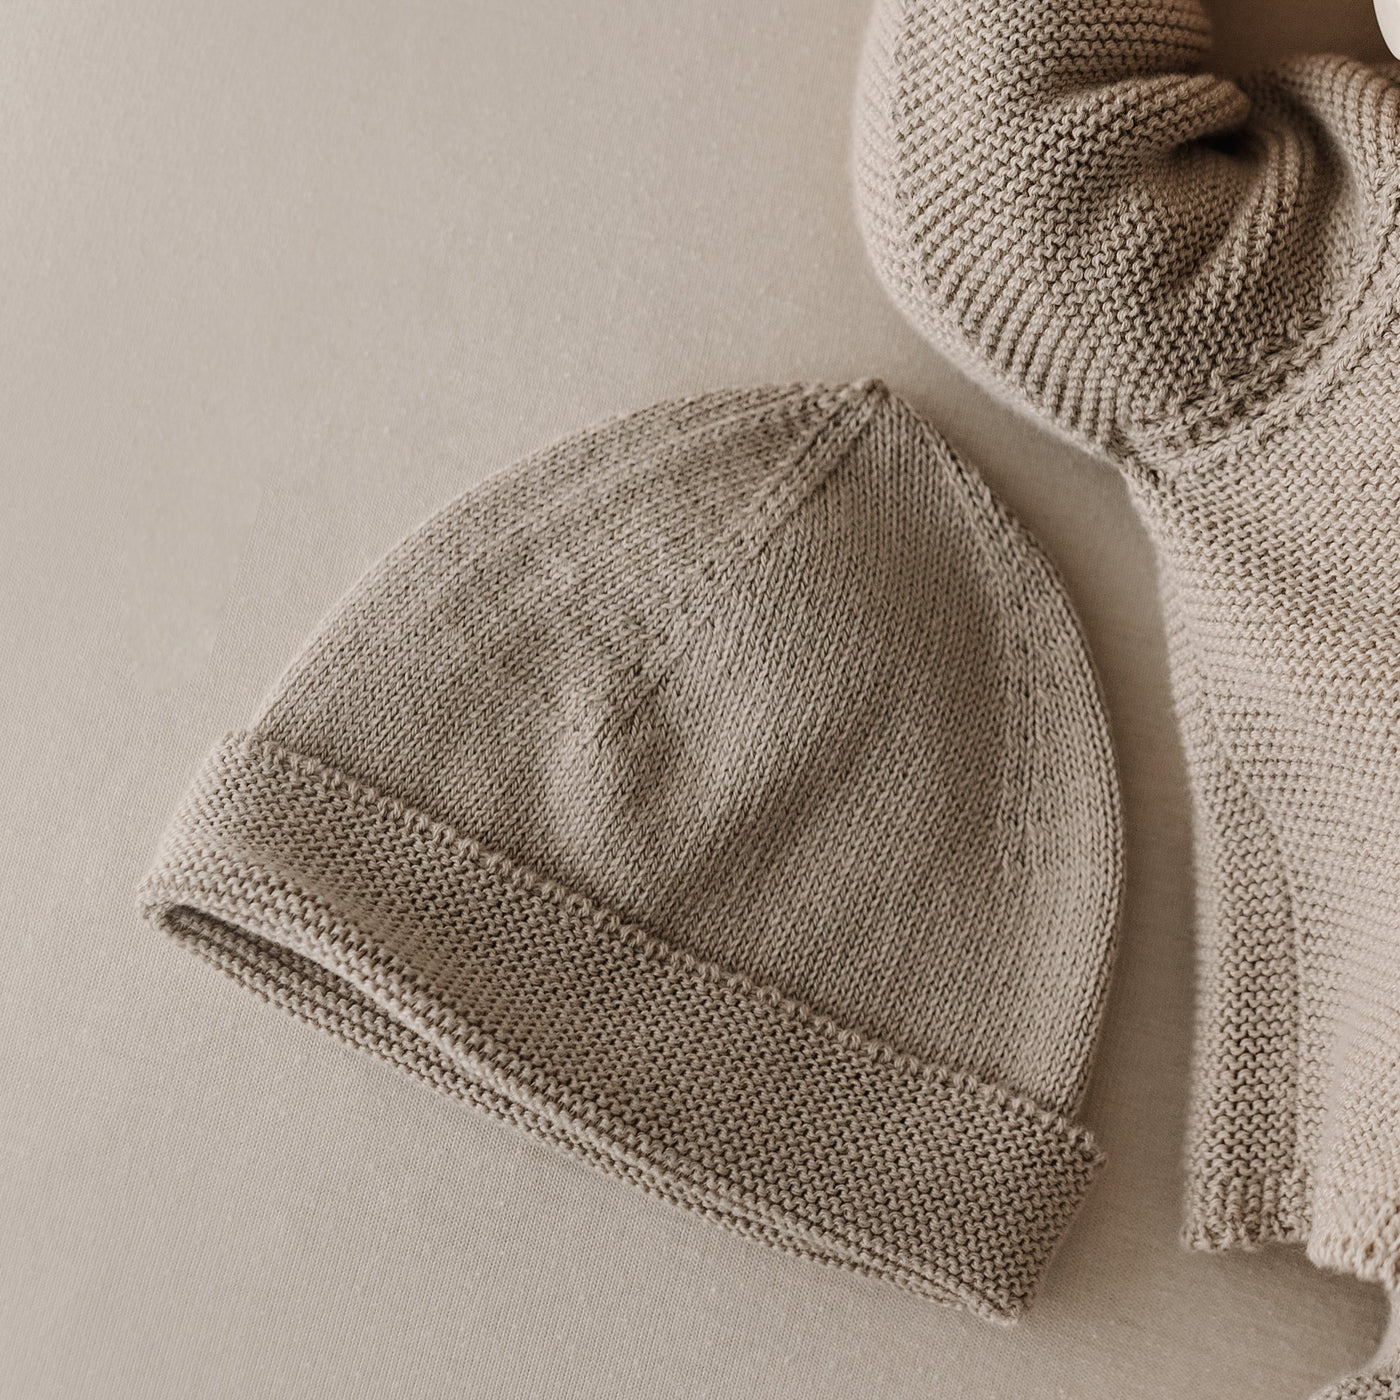 New Cappello Minimal in Cotone Biologico fino a 2 mesi - Baby Clothes - Baby Rainbow Shop - P.IVA 04847500230